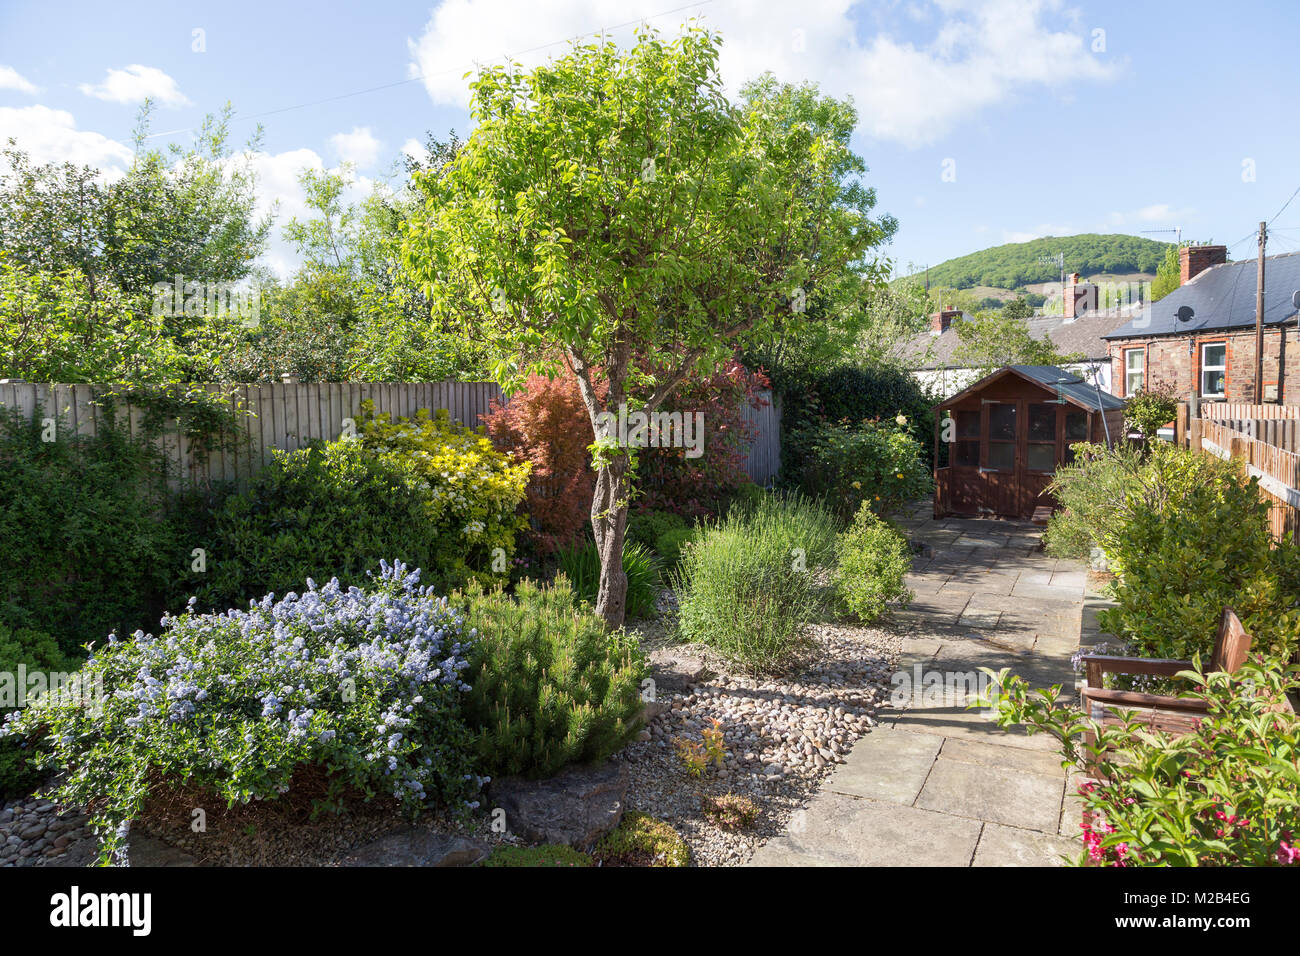 Garden with shrubs, Abergavenny, Wales, UK Stock Photo